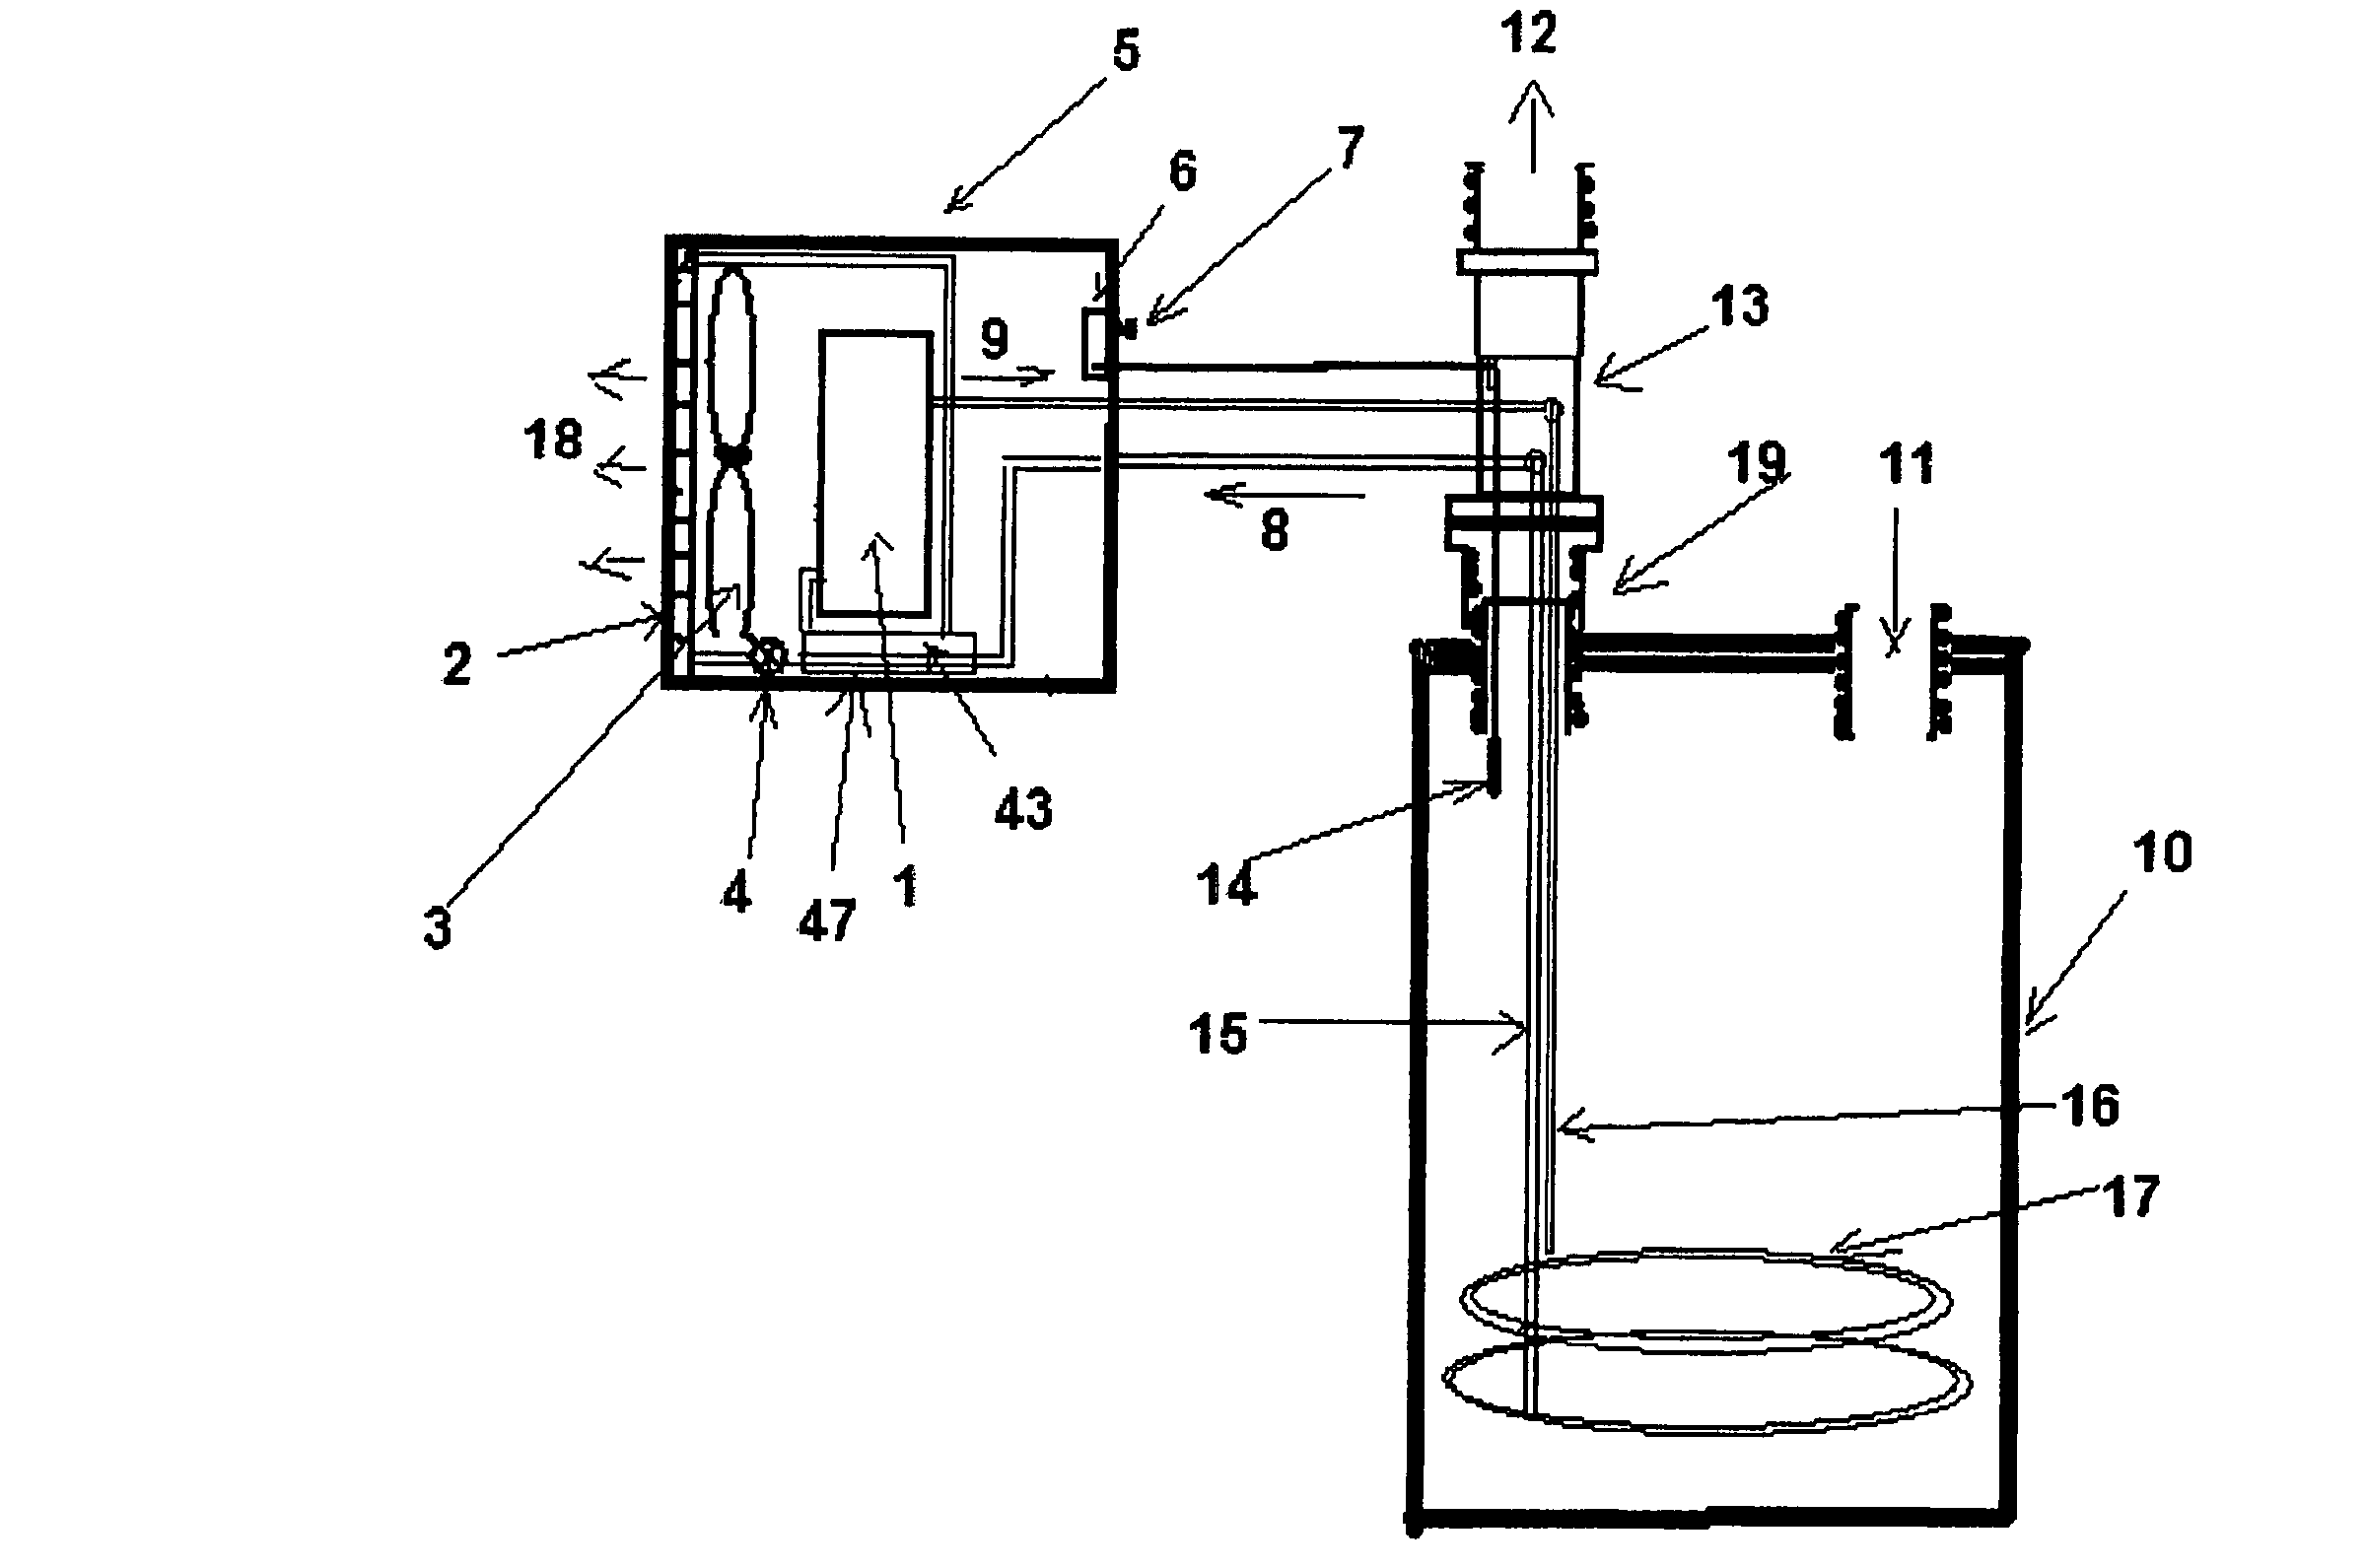 Heat pump liquid heater